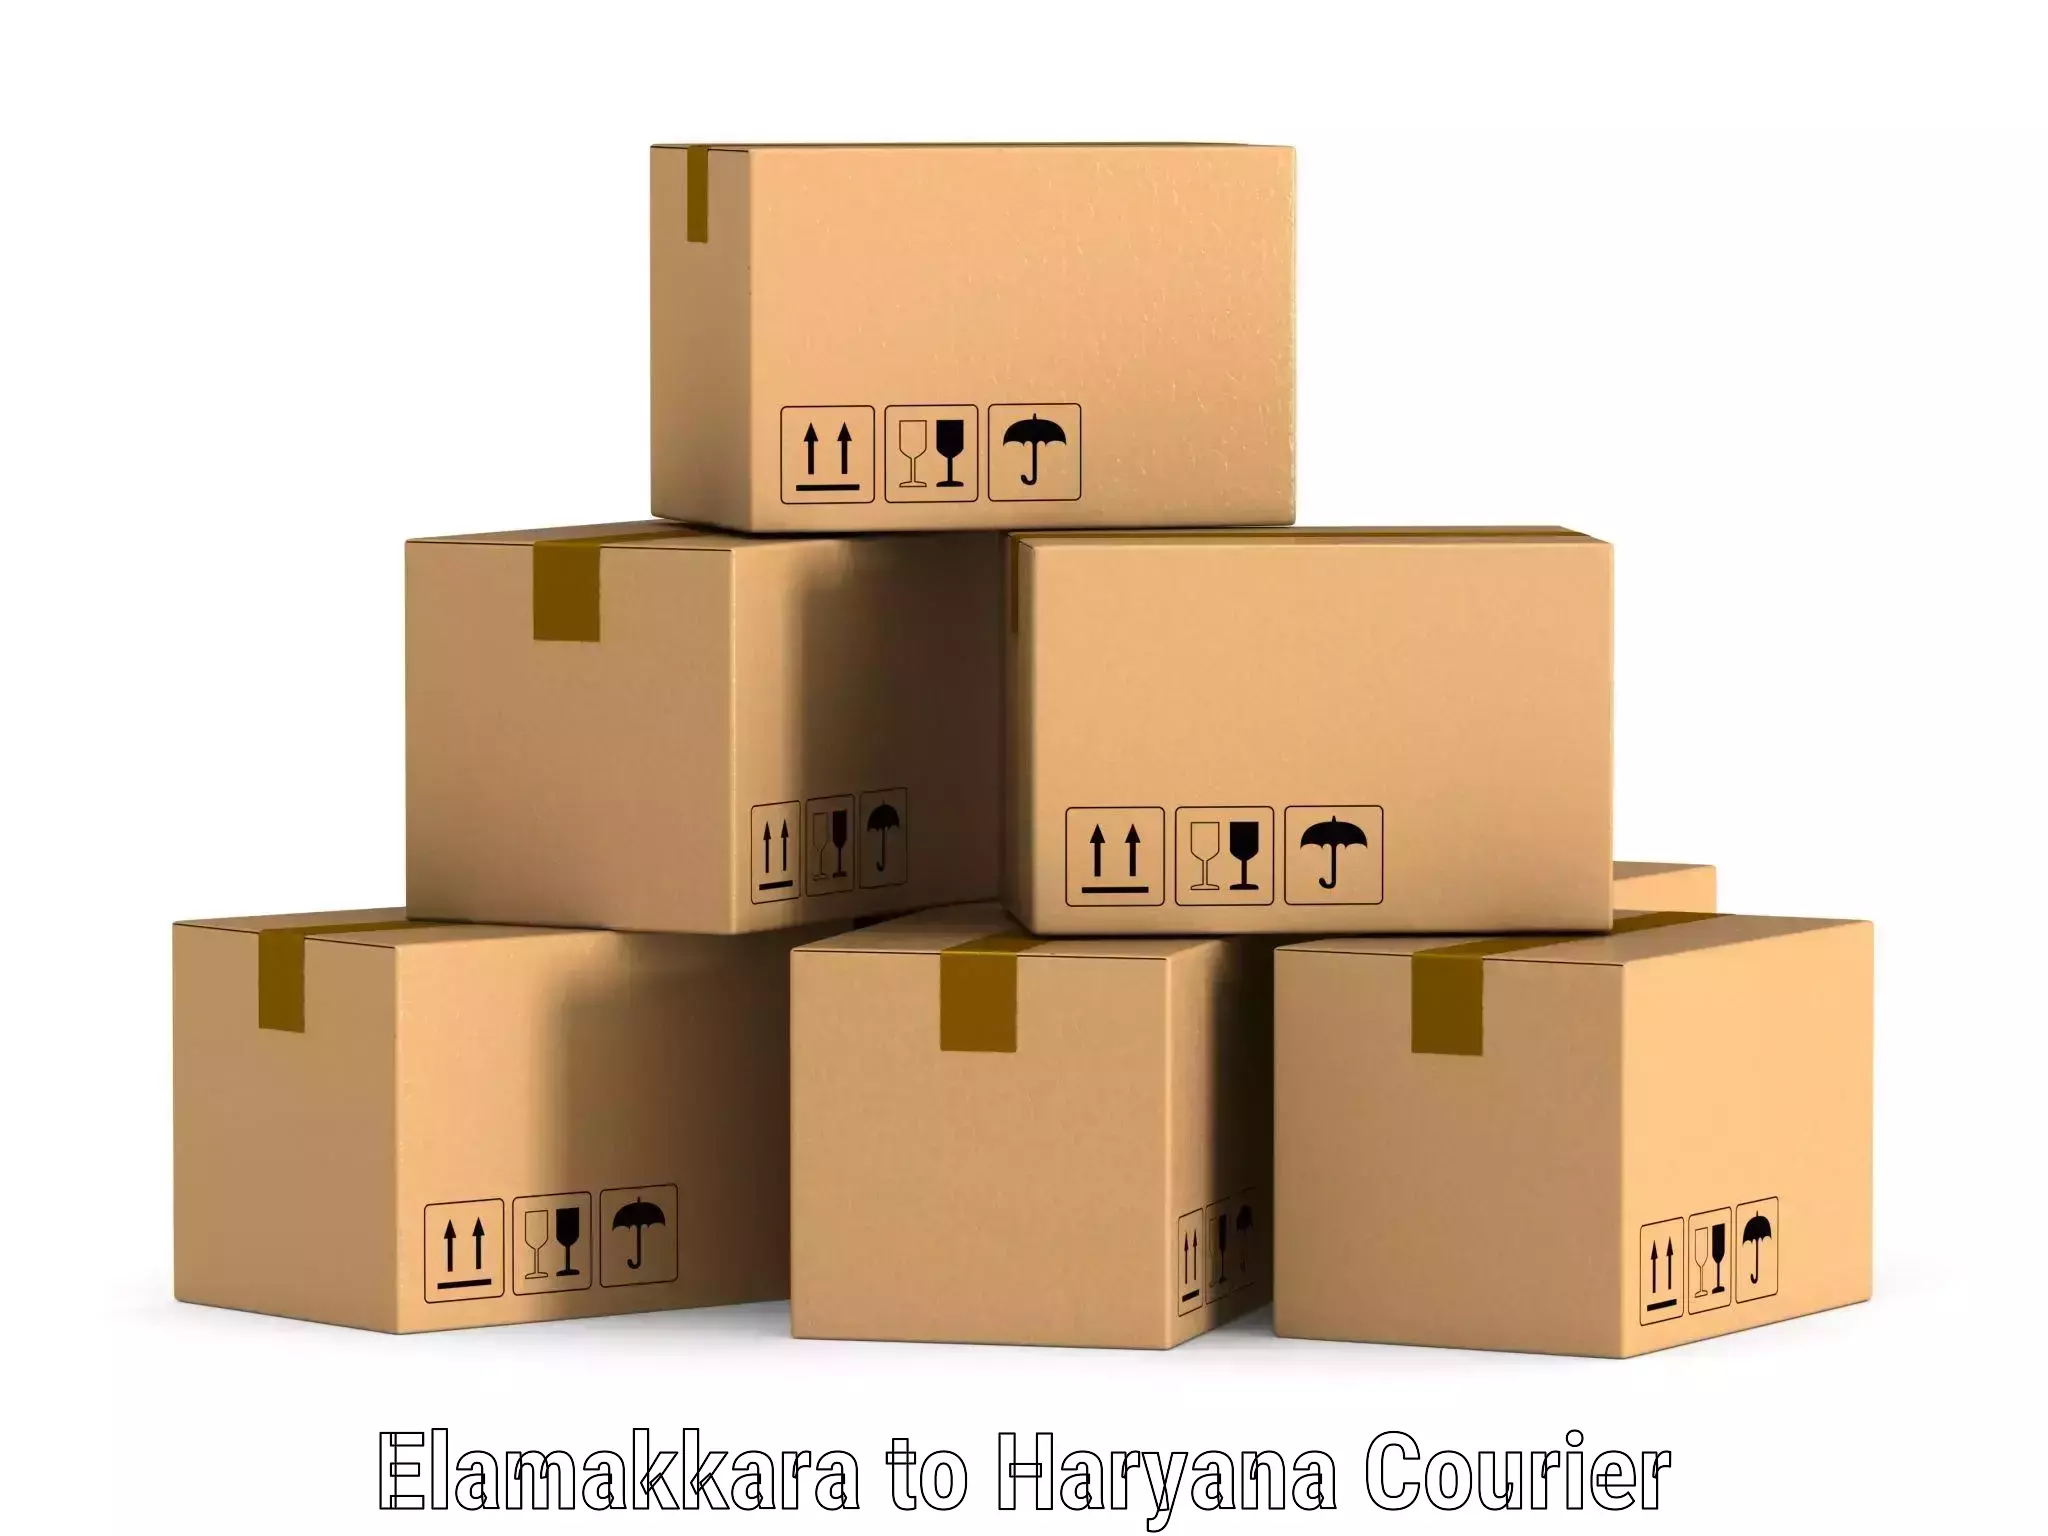 Nationwide delivery network Elamakkara to Haryana